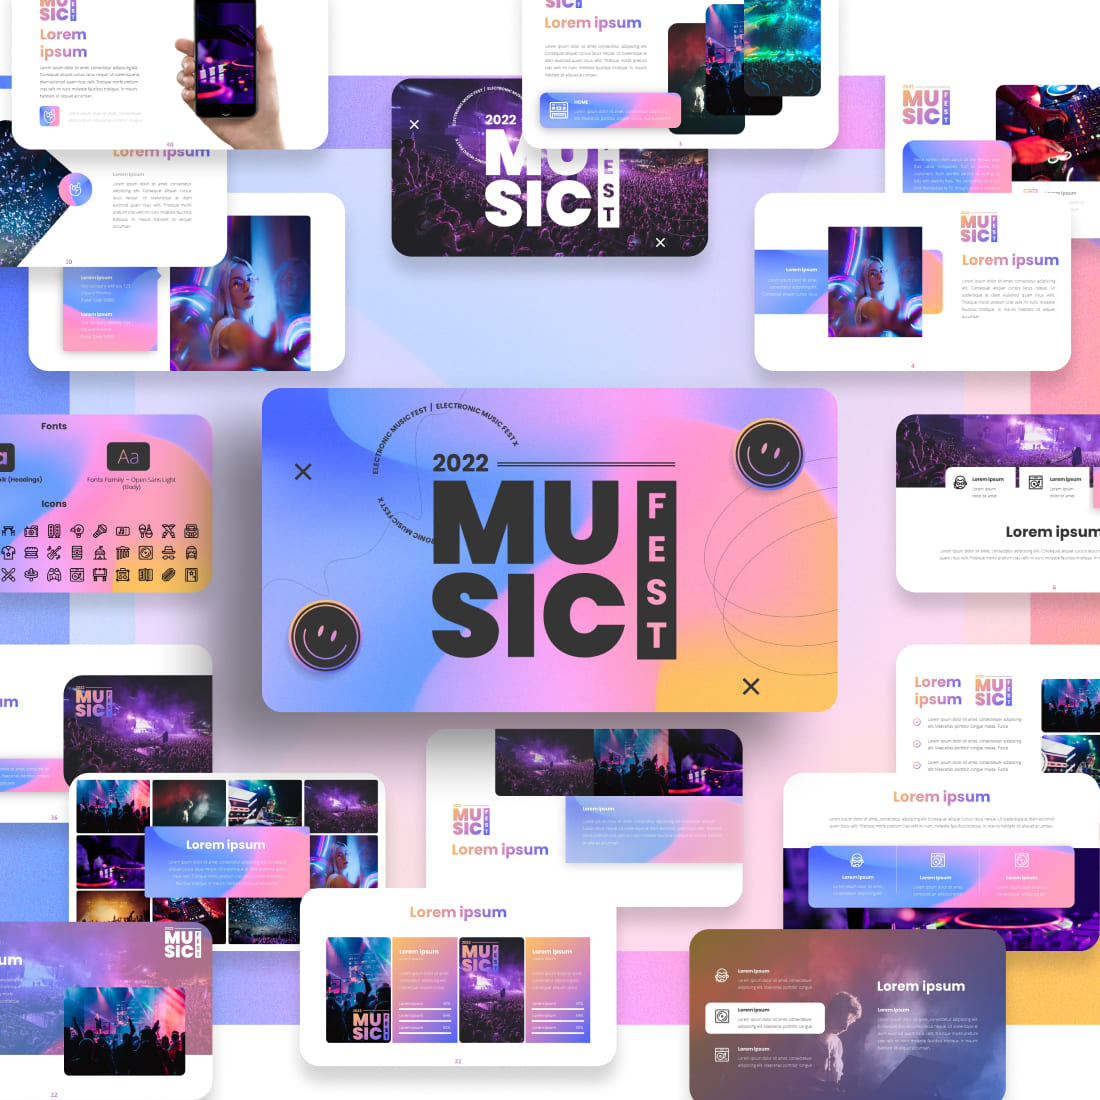 Musicfest googleslides template cover image.